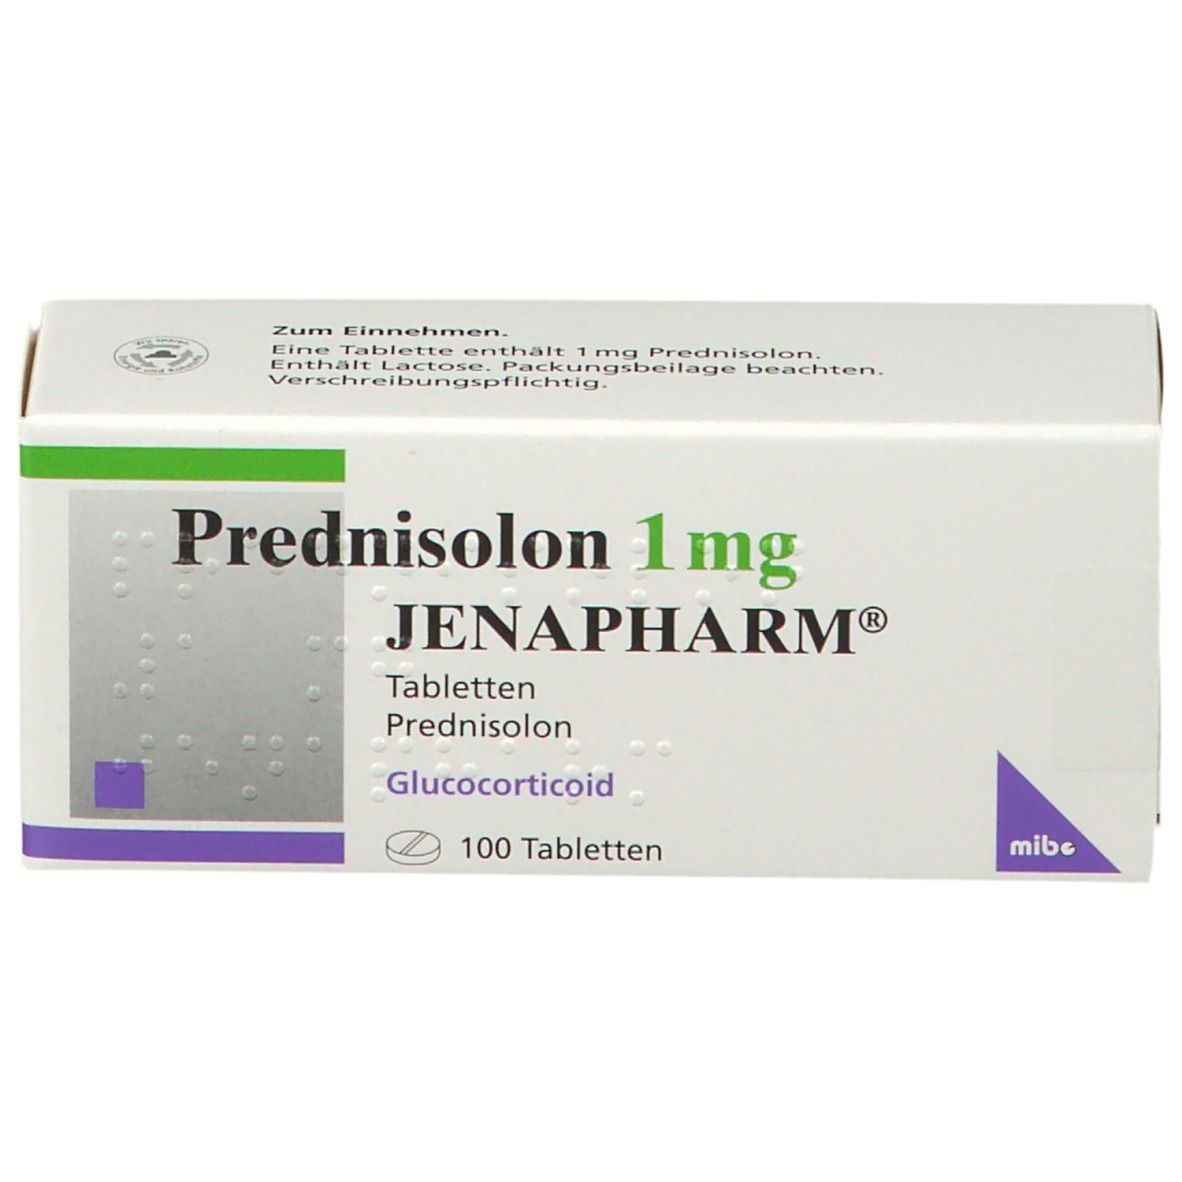 Prednisolon 1 mg JENAPHARM®